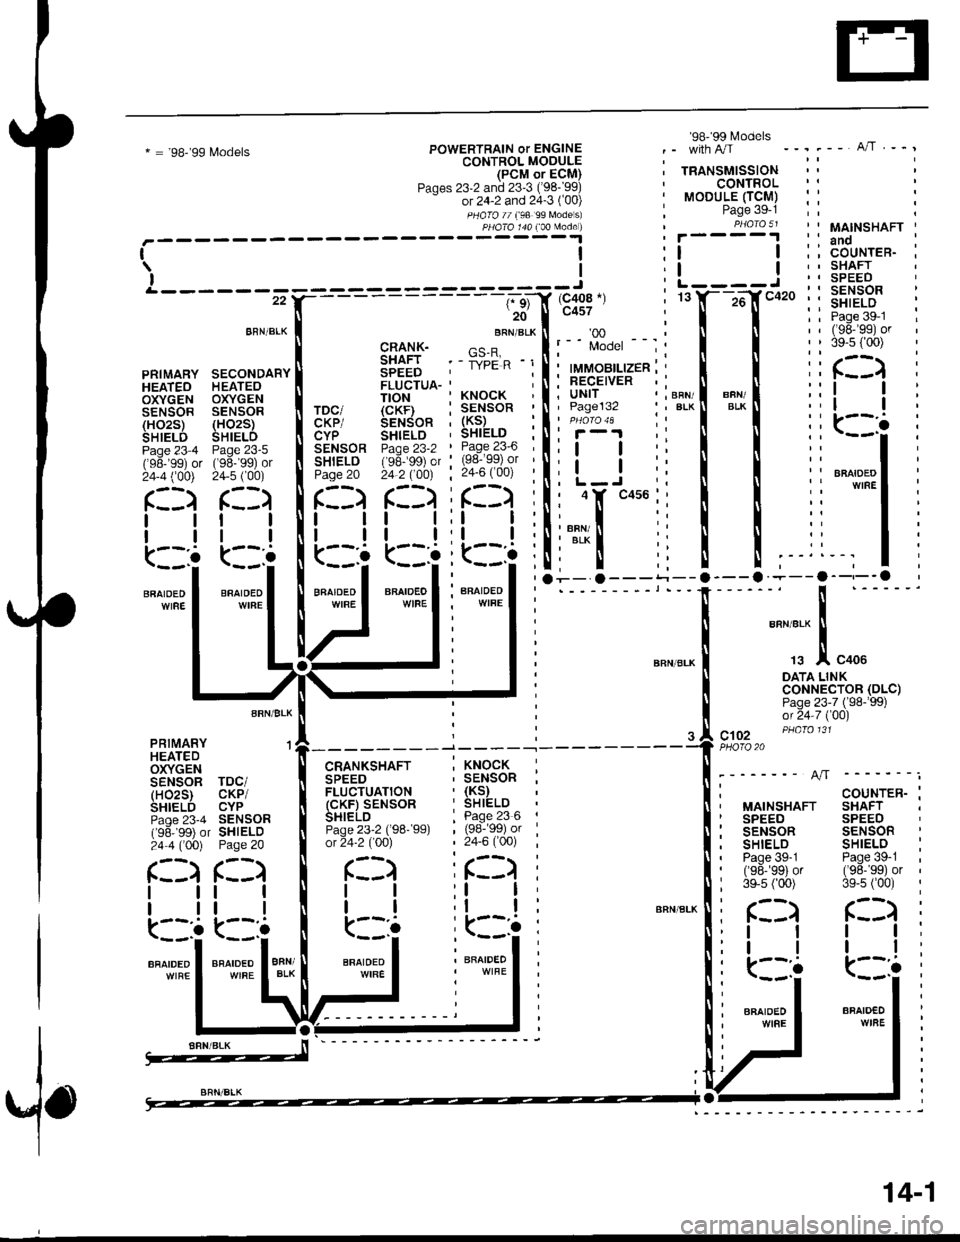 HONDA INTEGRA 1998 4.G Workshop Manual * = 98-99 L4odelsPOWERTRAIN or ENGINECONTROL MOOULE(PCM or ECM)Paqes 23-2 and 233 (98-99)- or 24-2 and 24-3 (00)
PHOTO // f98 99 Models)
98 99 l\4odels
TRANSMISSIONCONTROLMODULE (TCM)Page 39-1